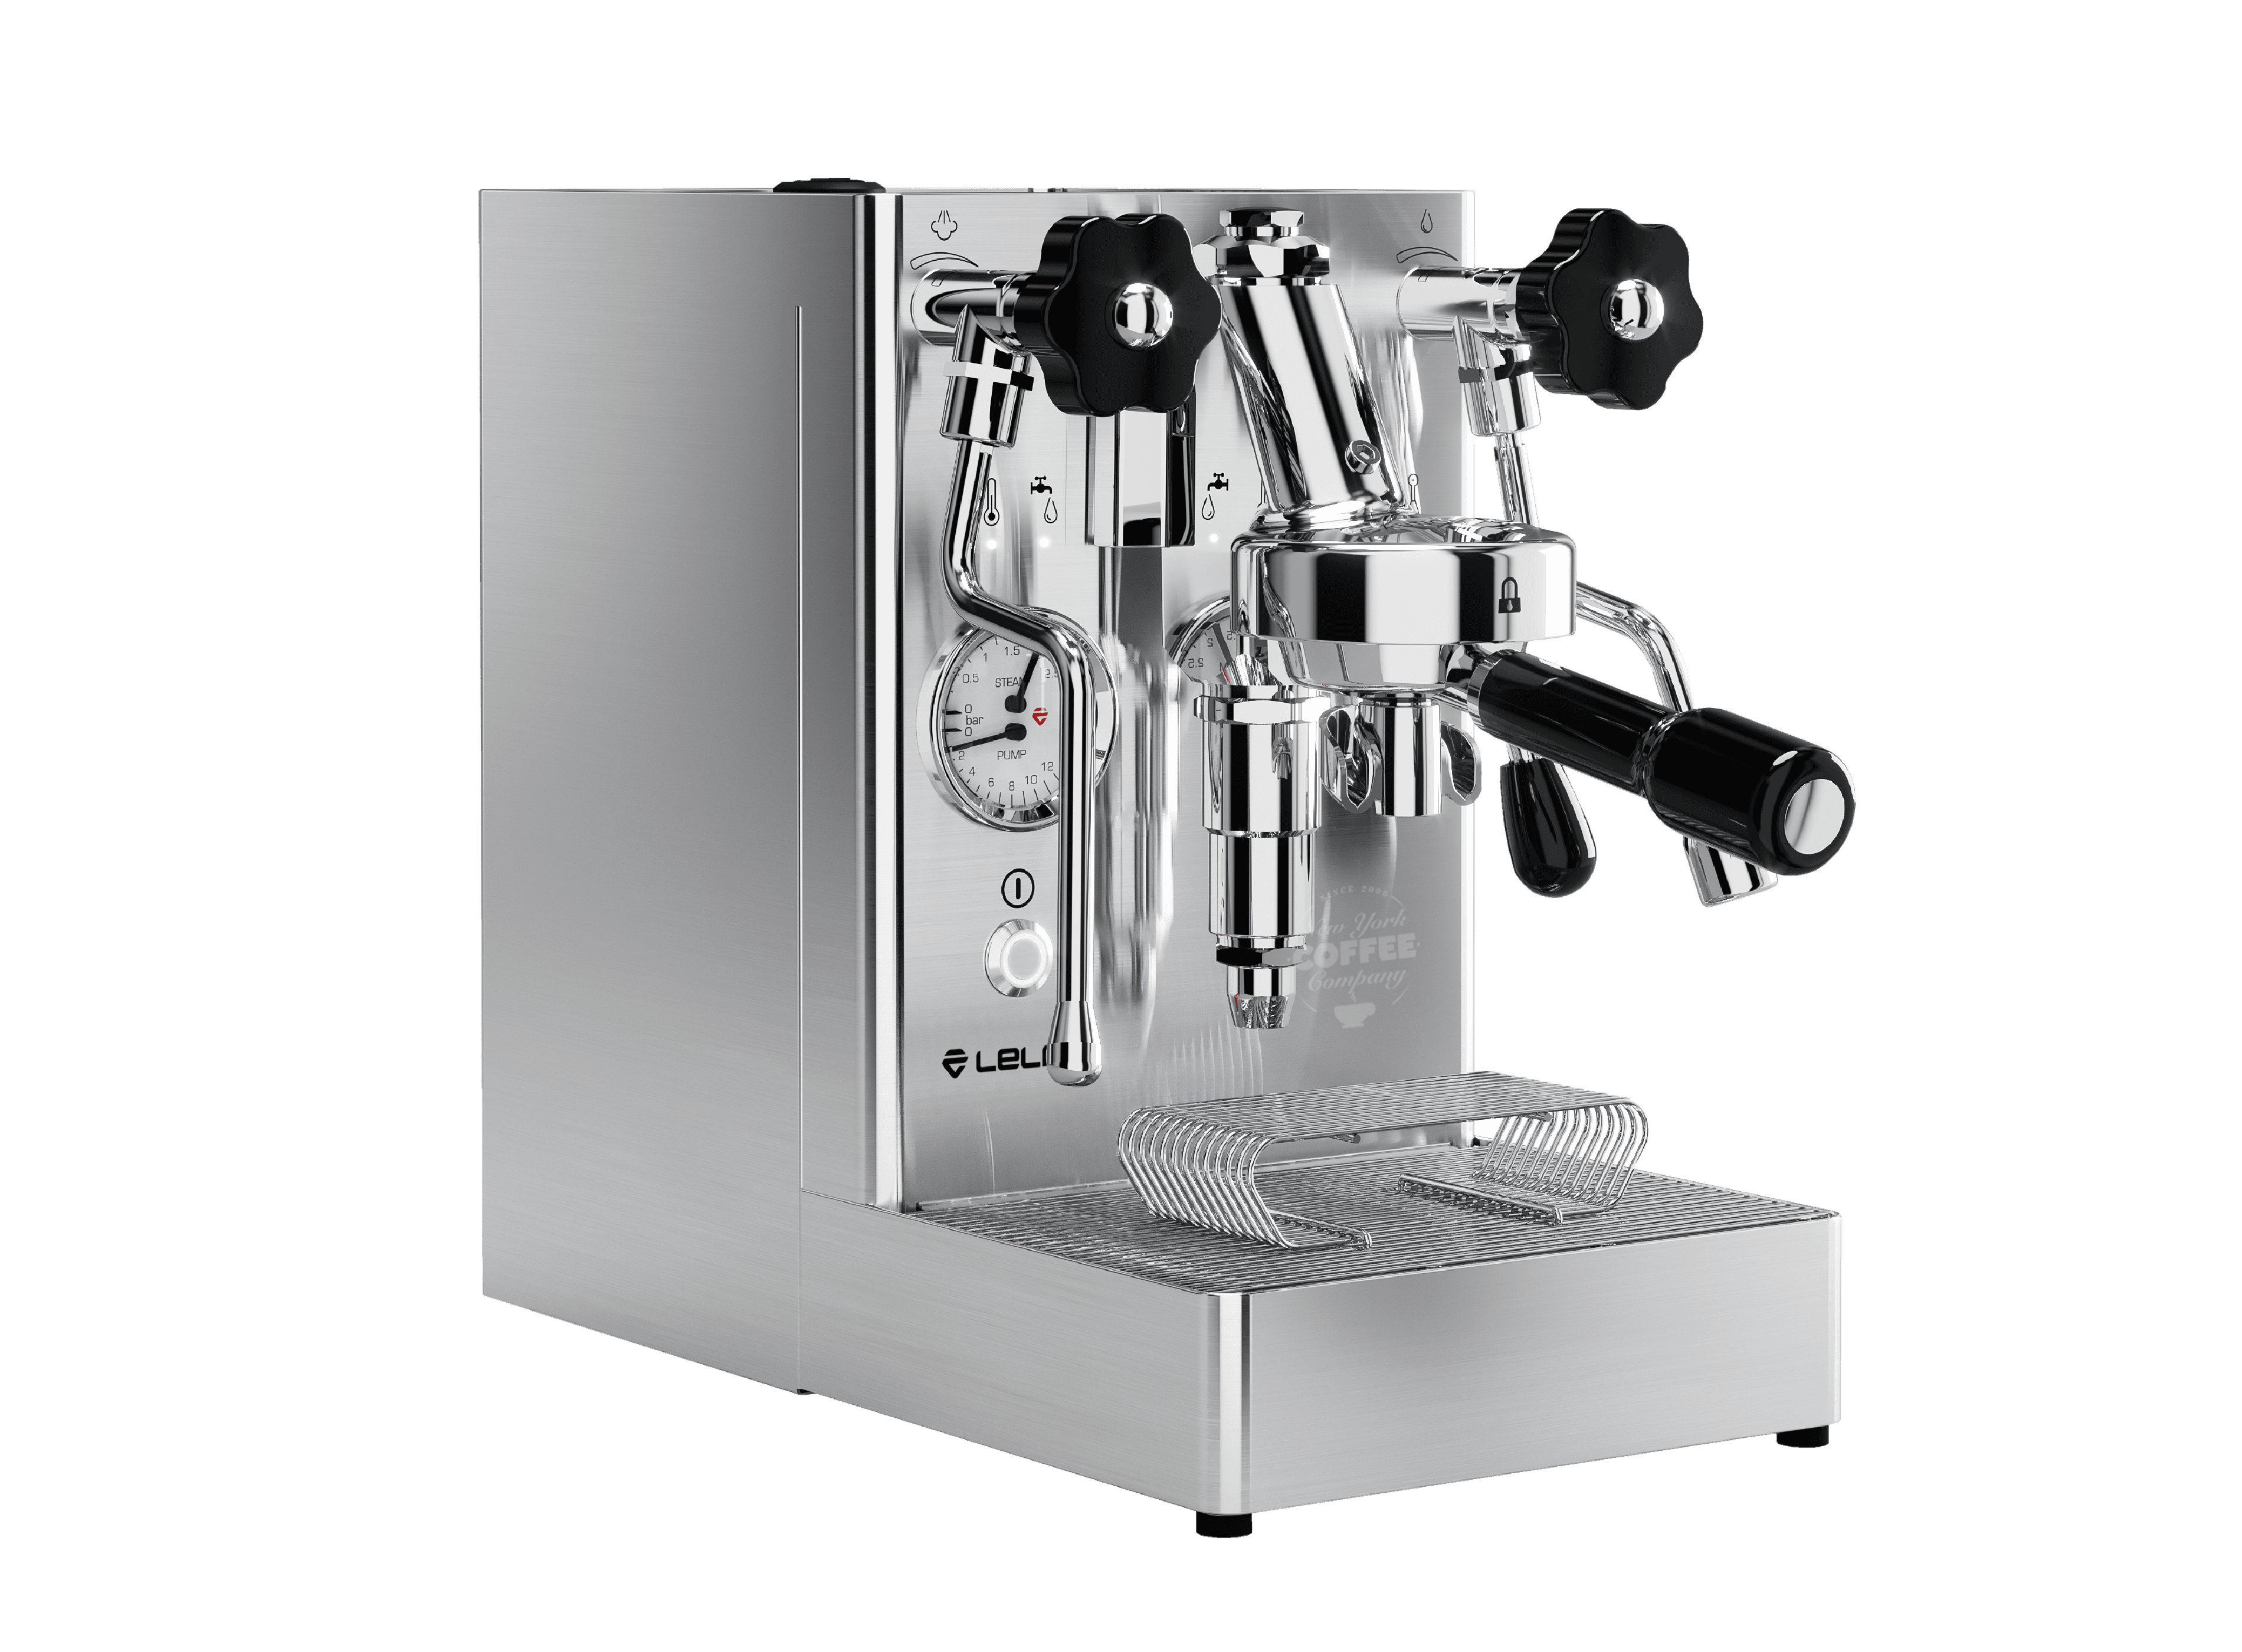 Lelit PL62X Mara V2 Espressomaschine